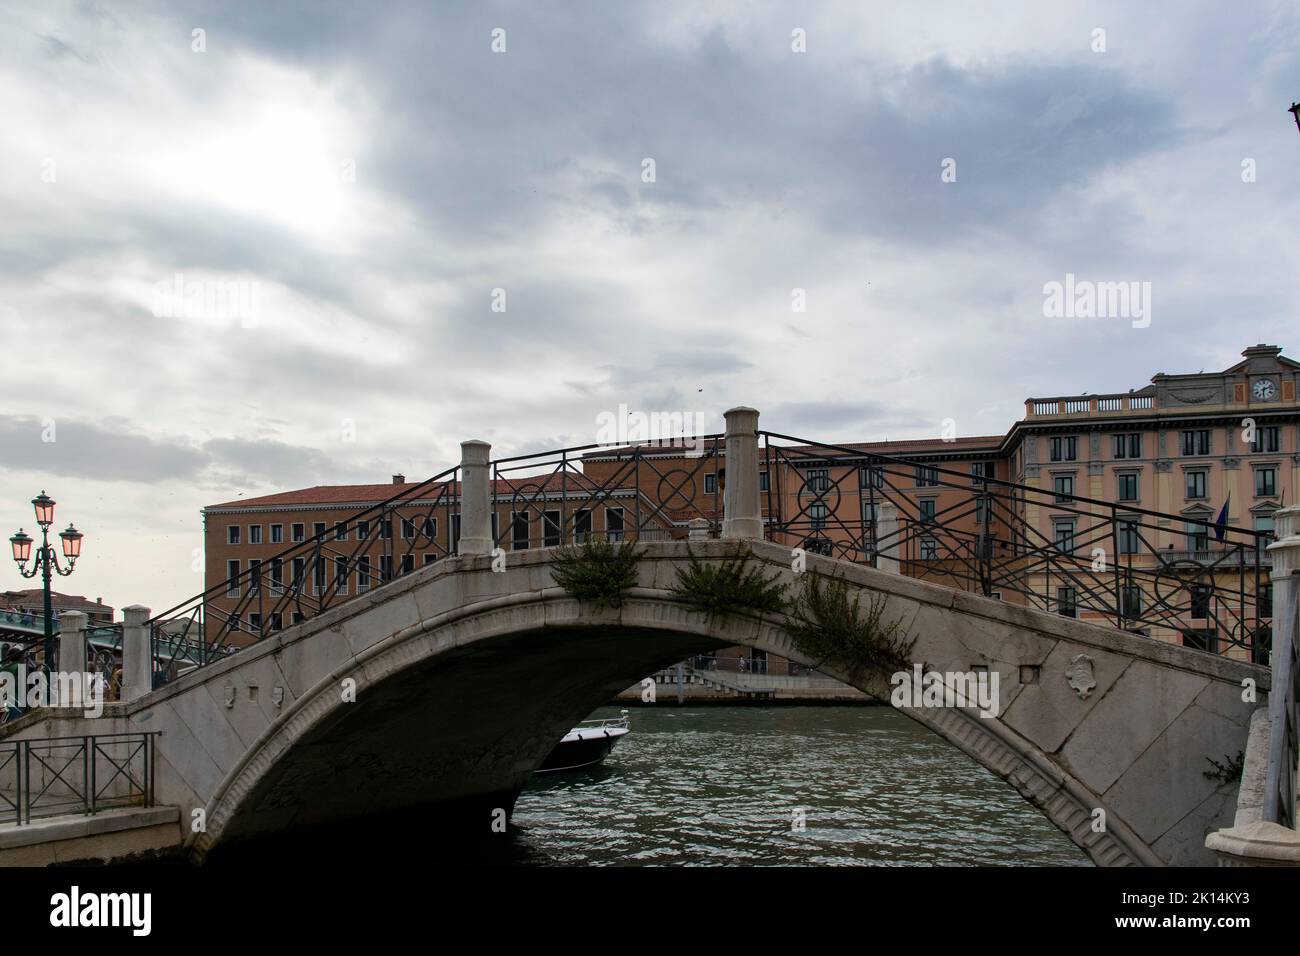 A pedestrian bridge in the city of Venice, Italy Stock Photo